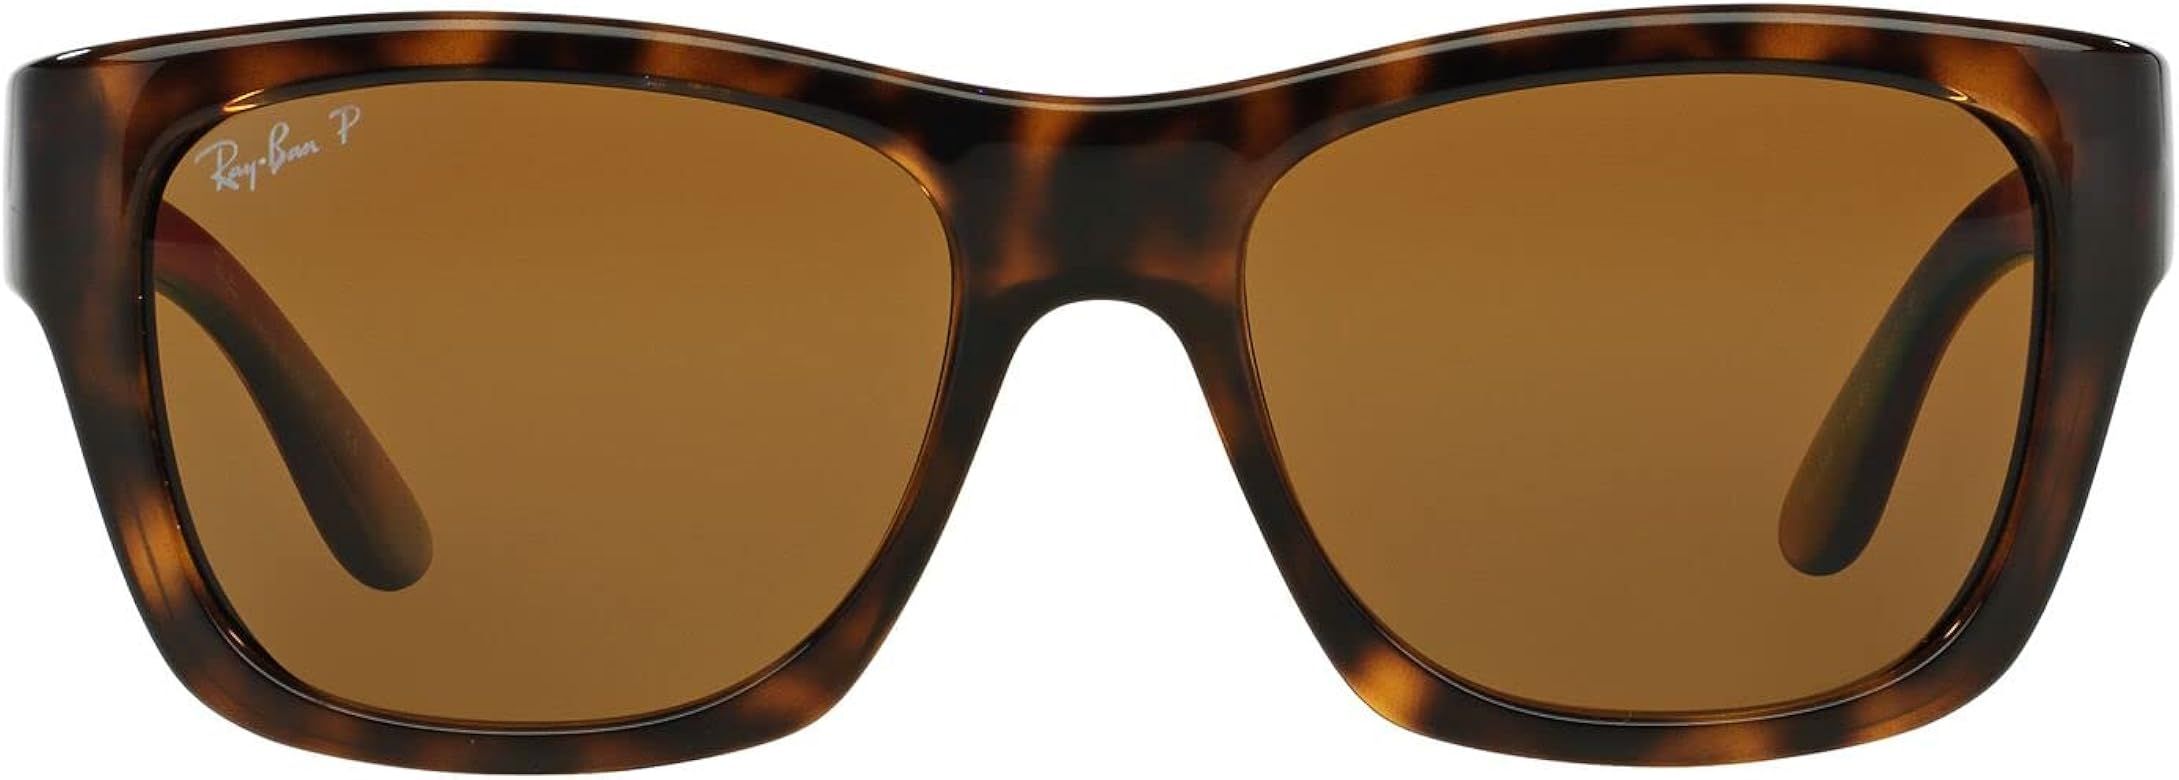 Ray-Ban Unisex Sunglasses Light Havana Frame, Brown Gradient Lenses, 53MM | Amazon (US)